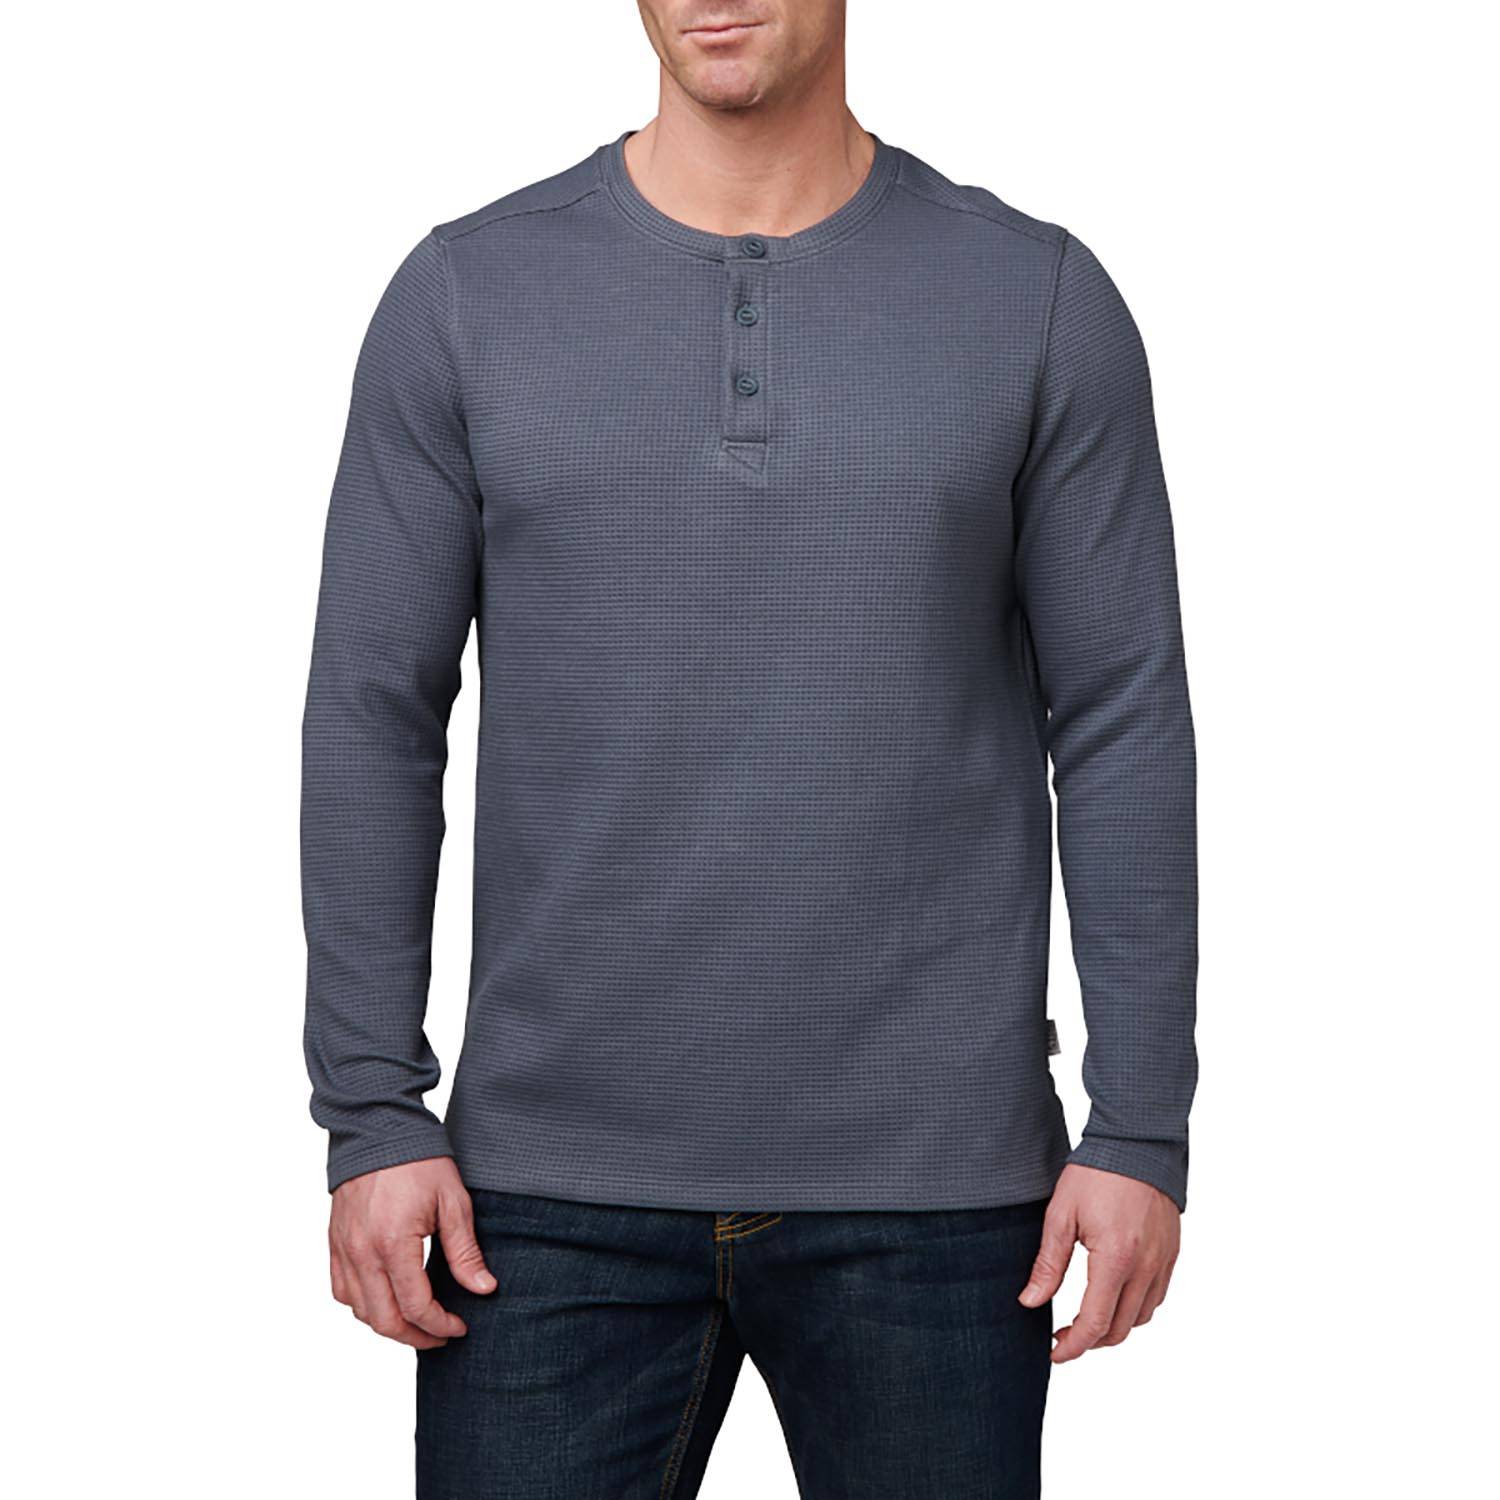 5.11 Tactical Jasper Thermal Long Sleeve Shirt